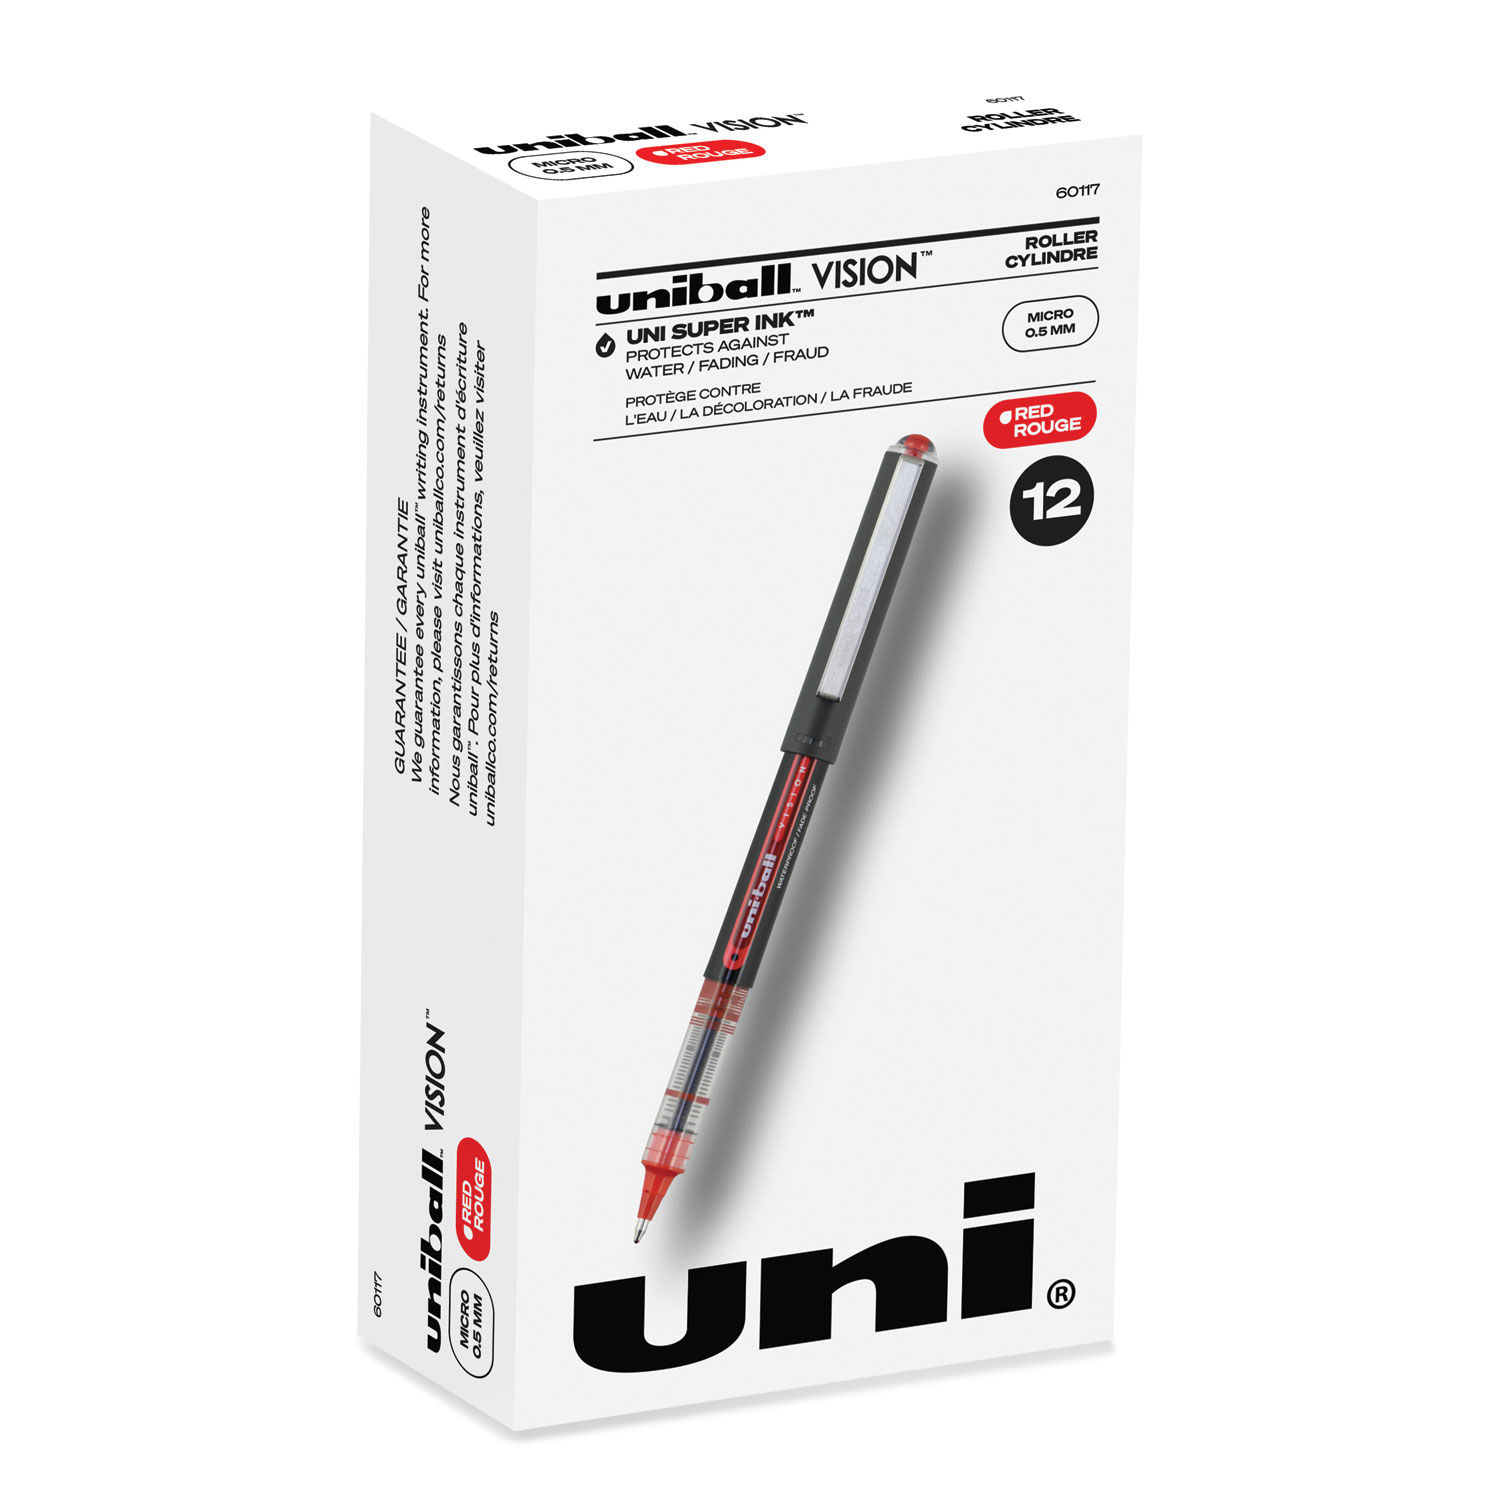 VISION Roller Ball Pen by uni-ballandreg; UBC60117